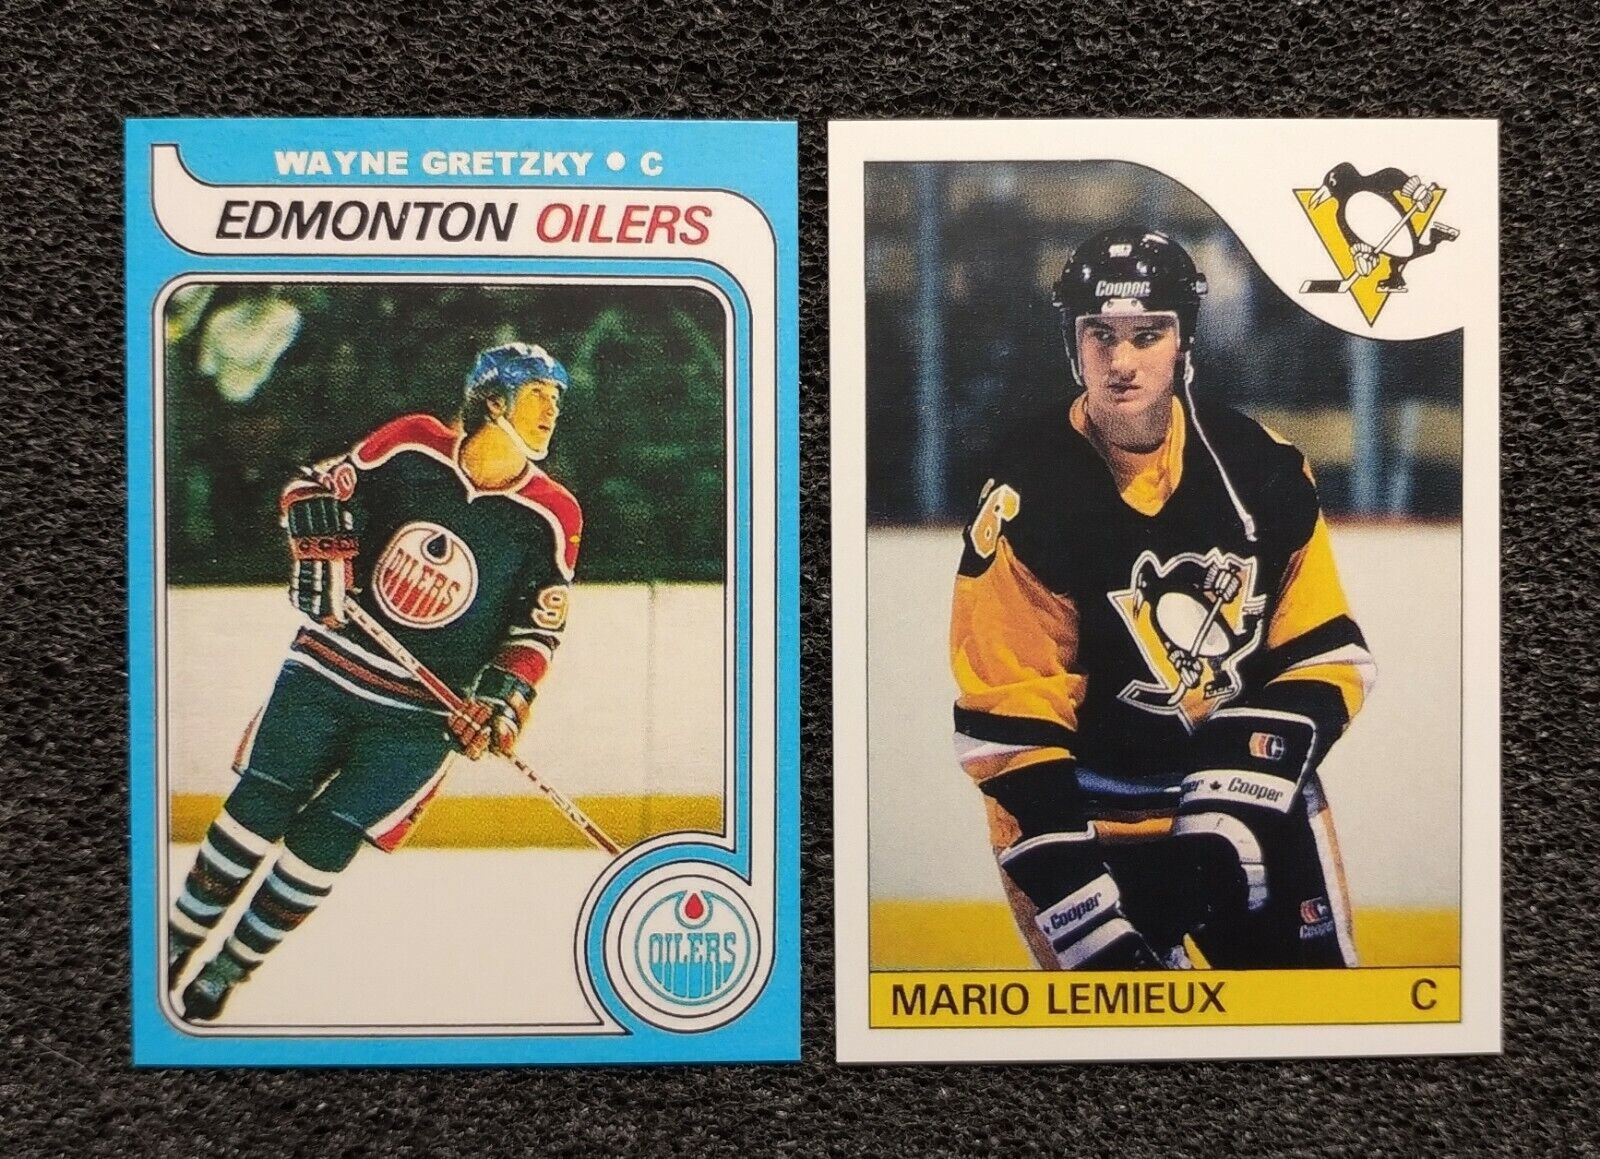 1979 Wayne Gretzky 1984 Mario Lemieux Rookie Card Lot. ACEO Novelty Cards. Mint